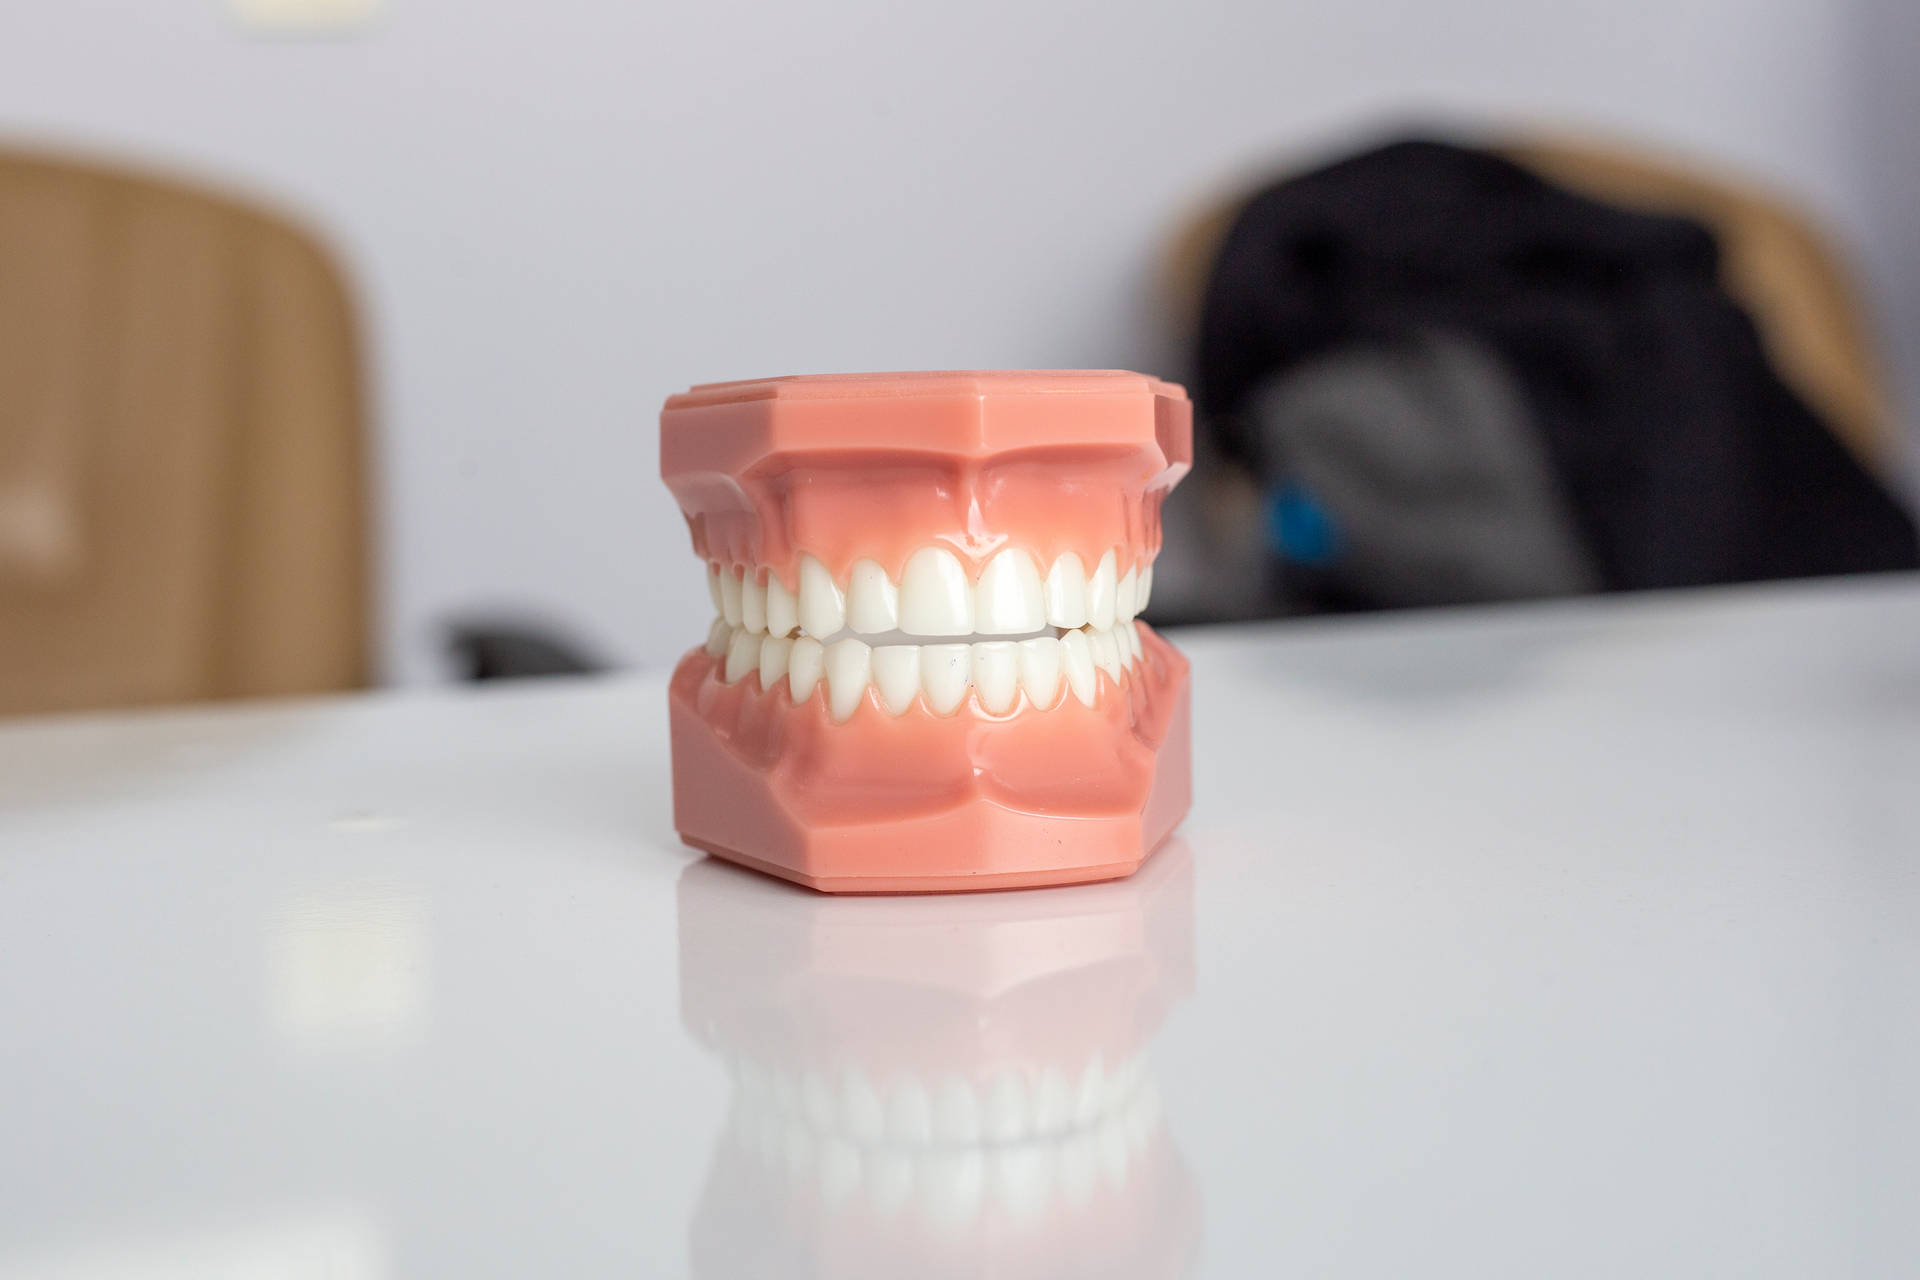 Plastic Model Of Teeth Dentistry Background